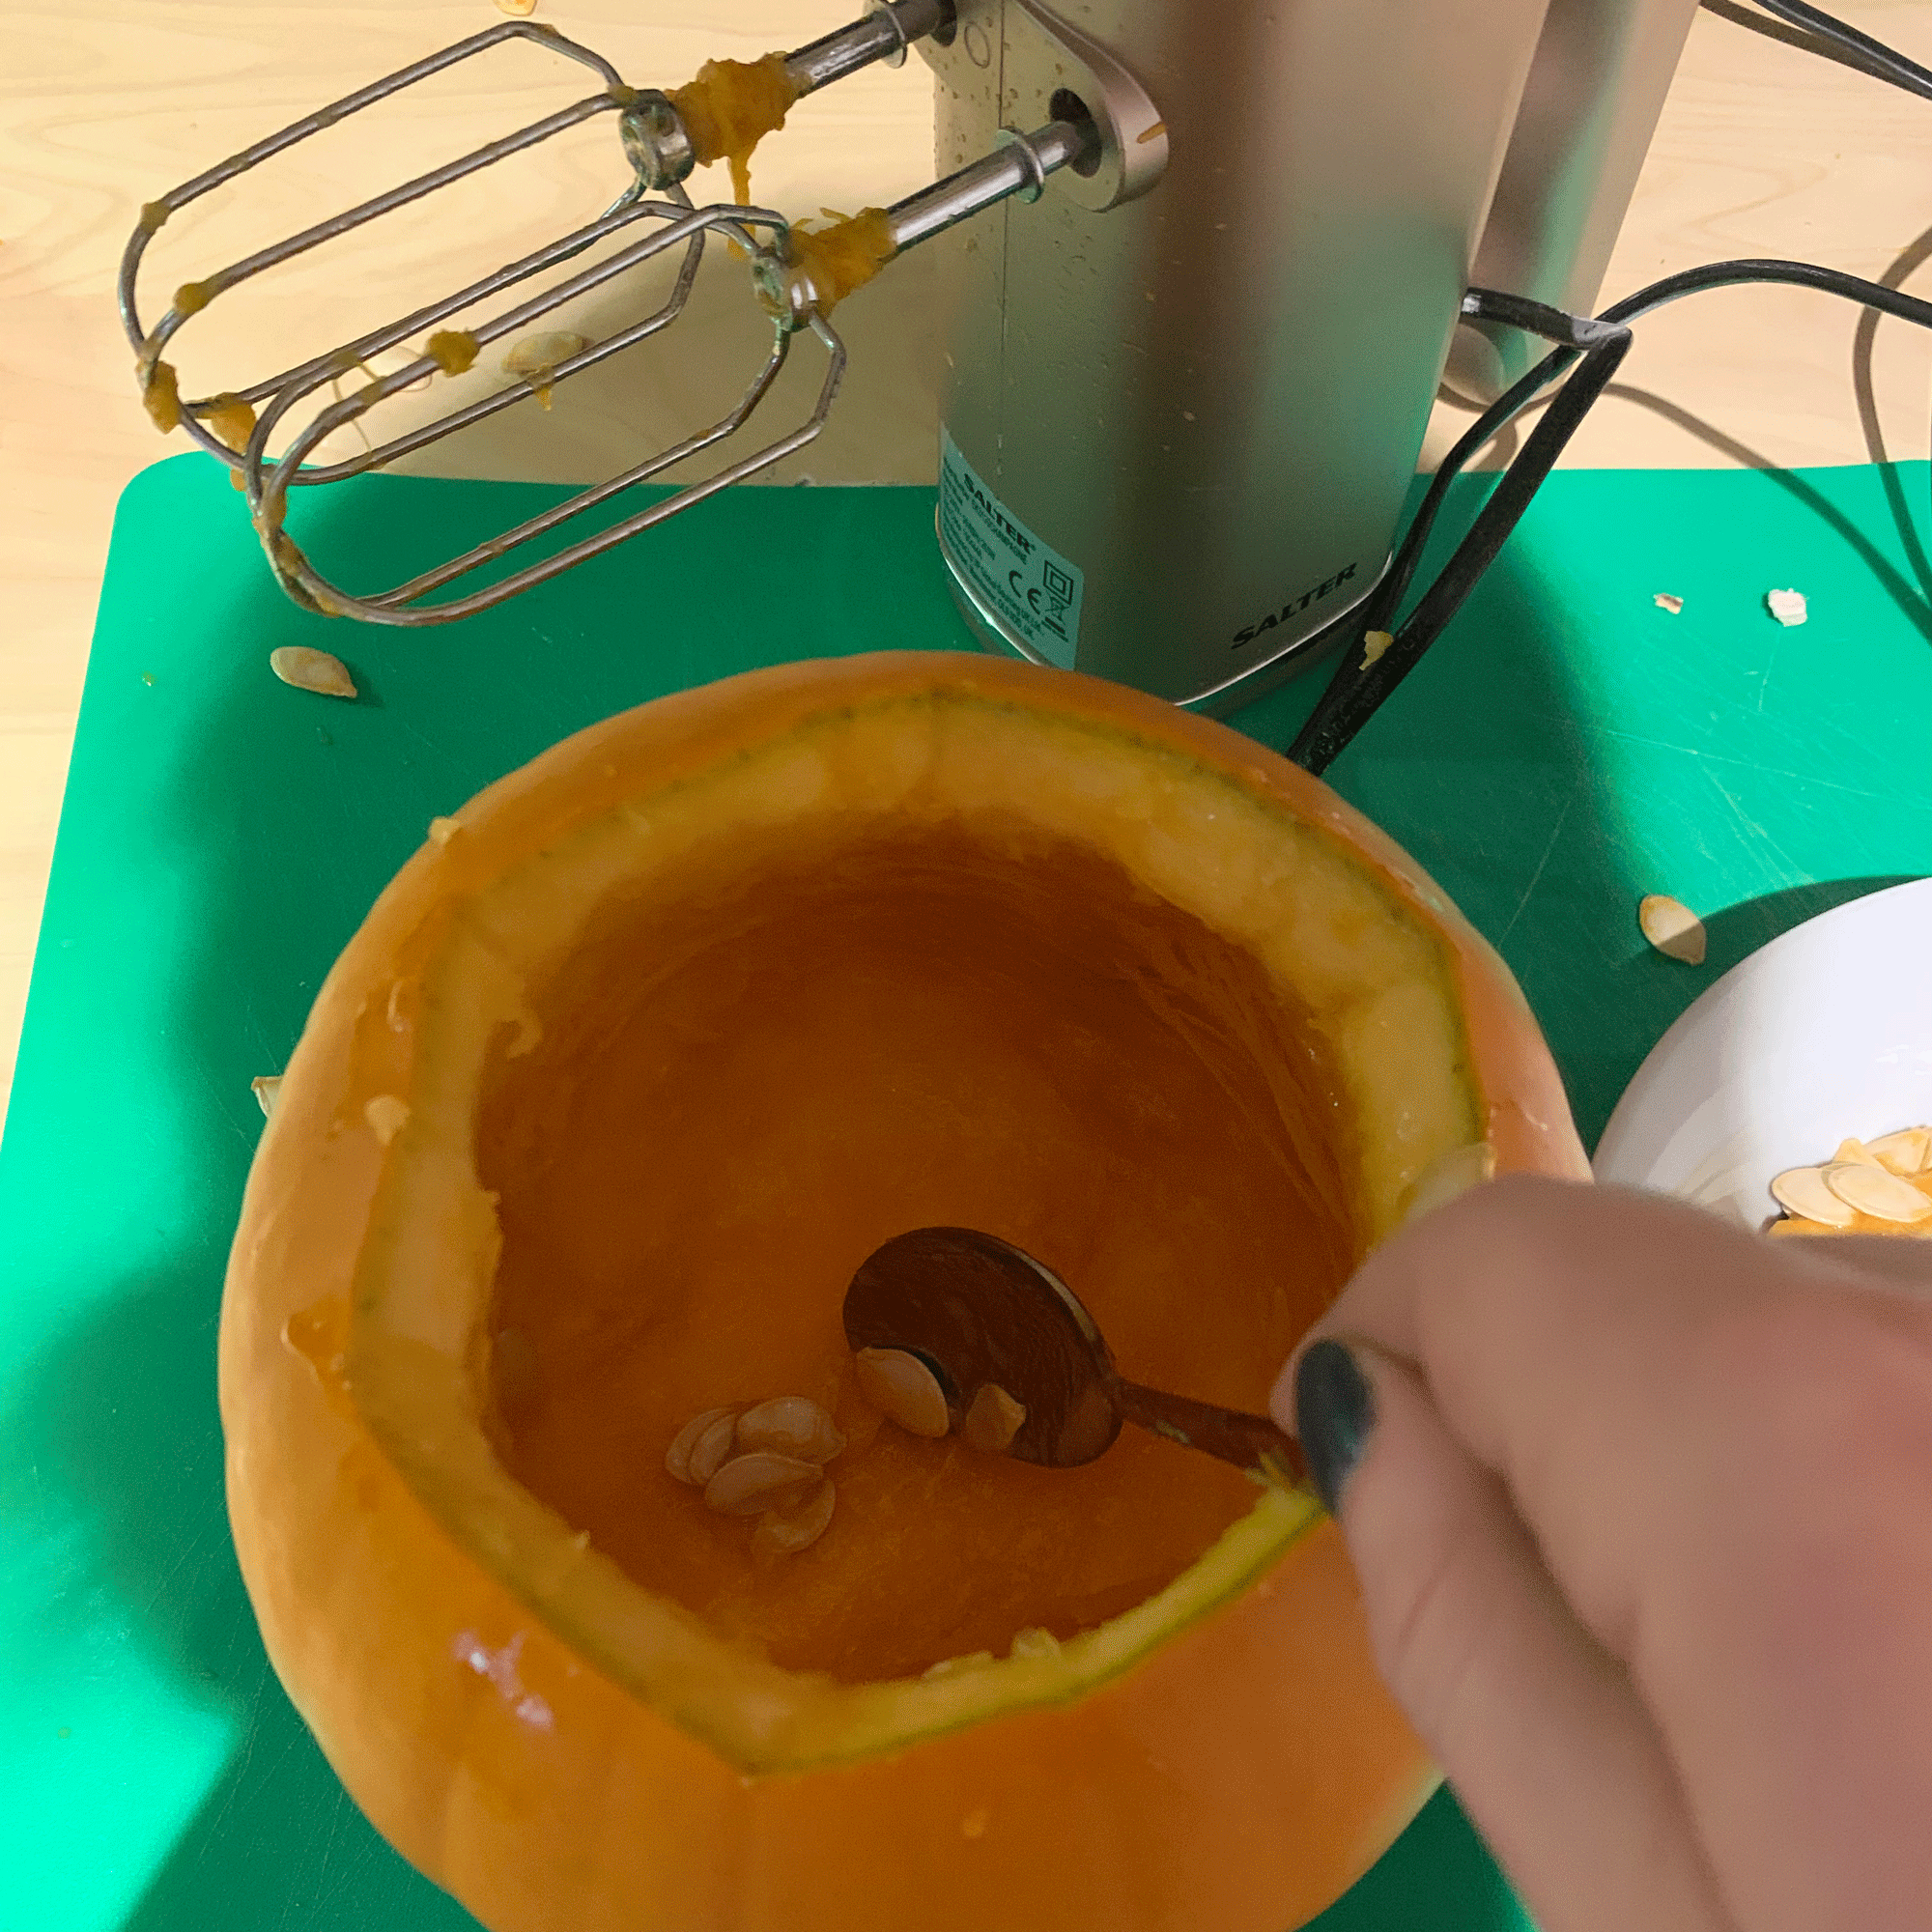 Pumpkin with metal spoon